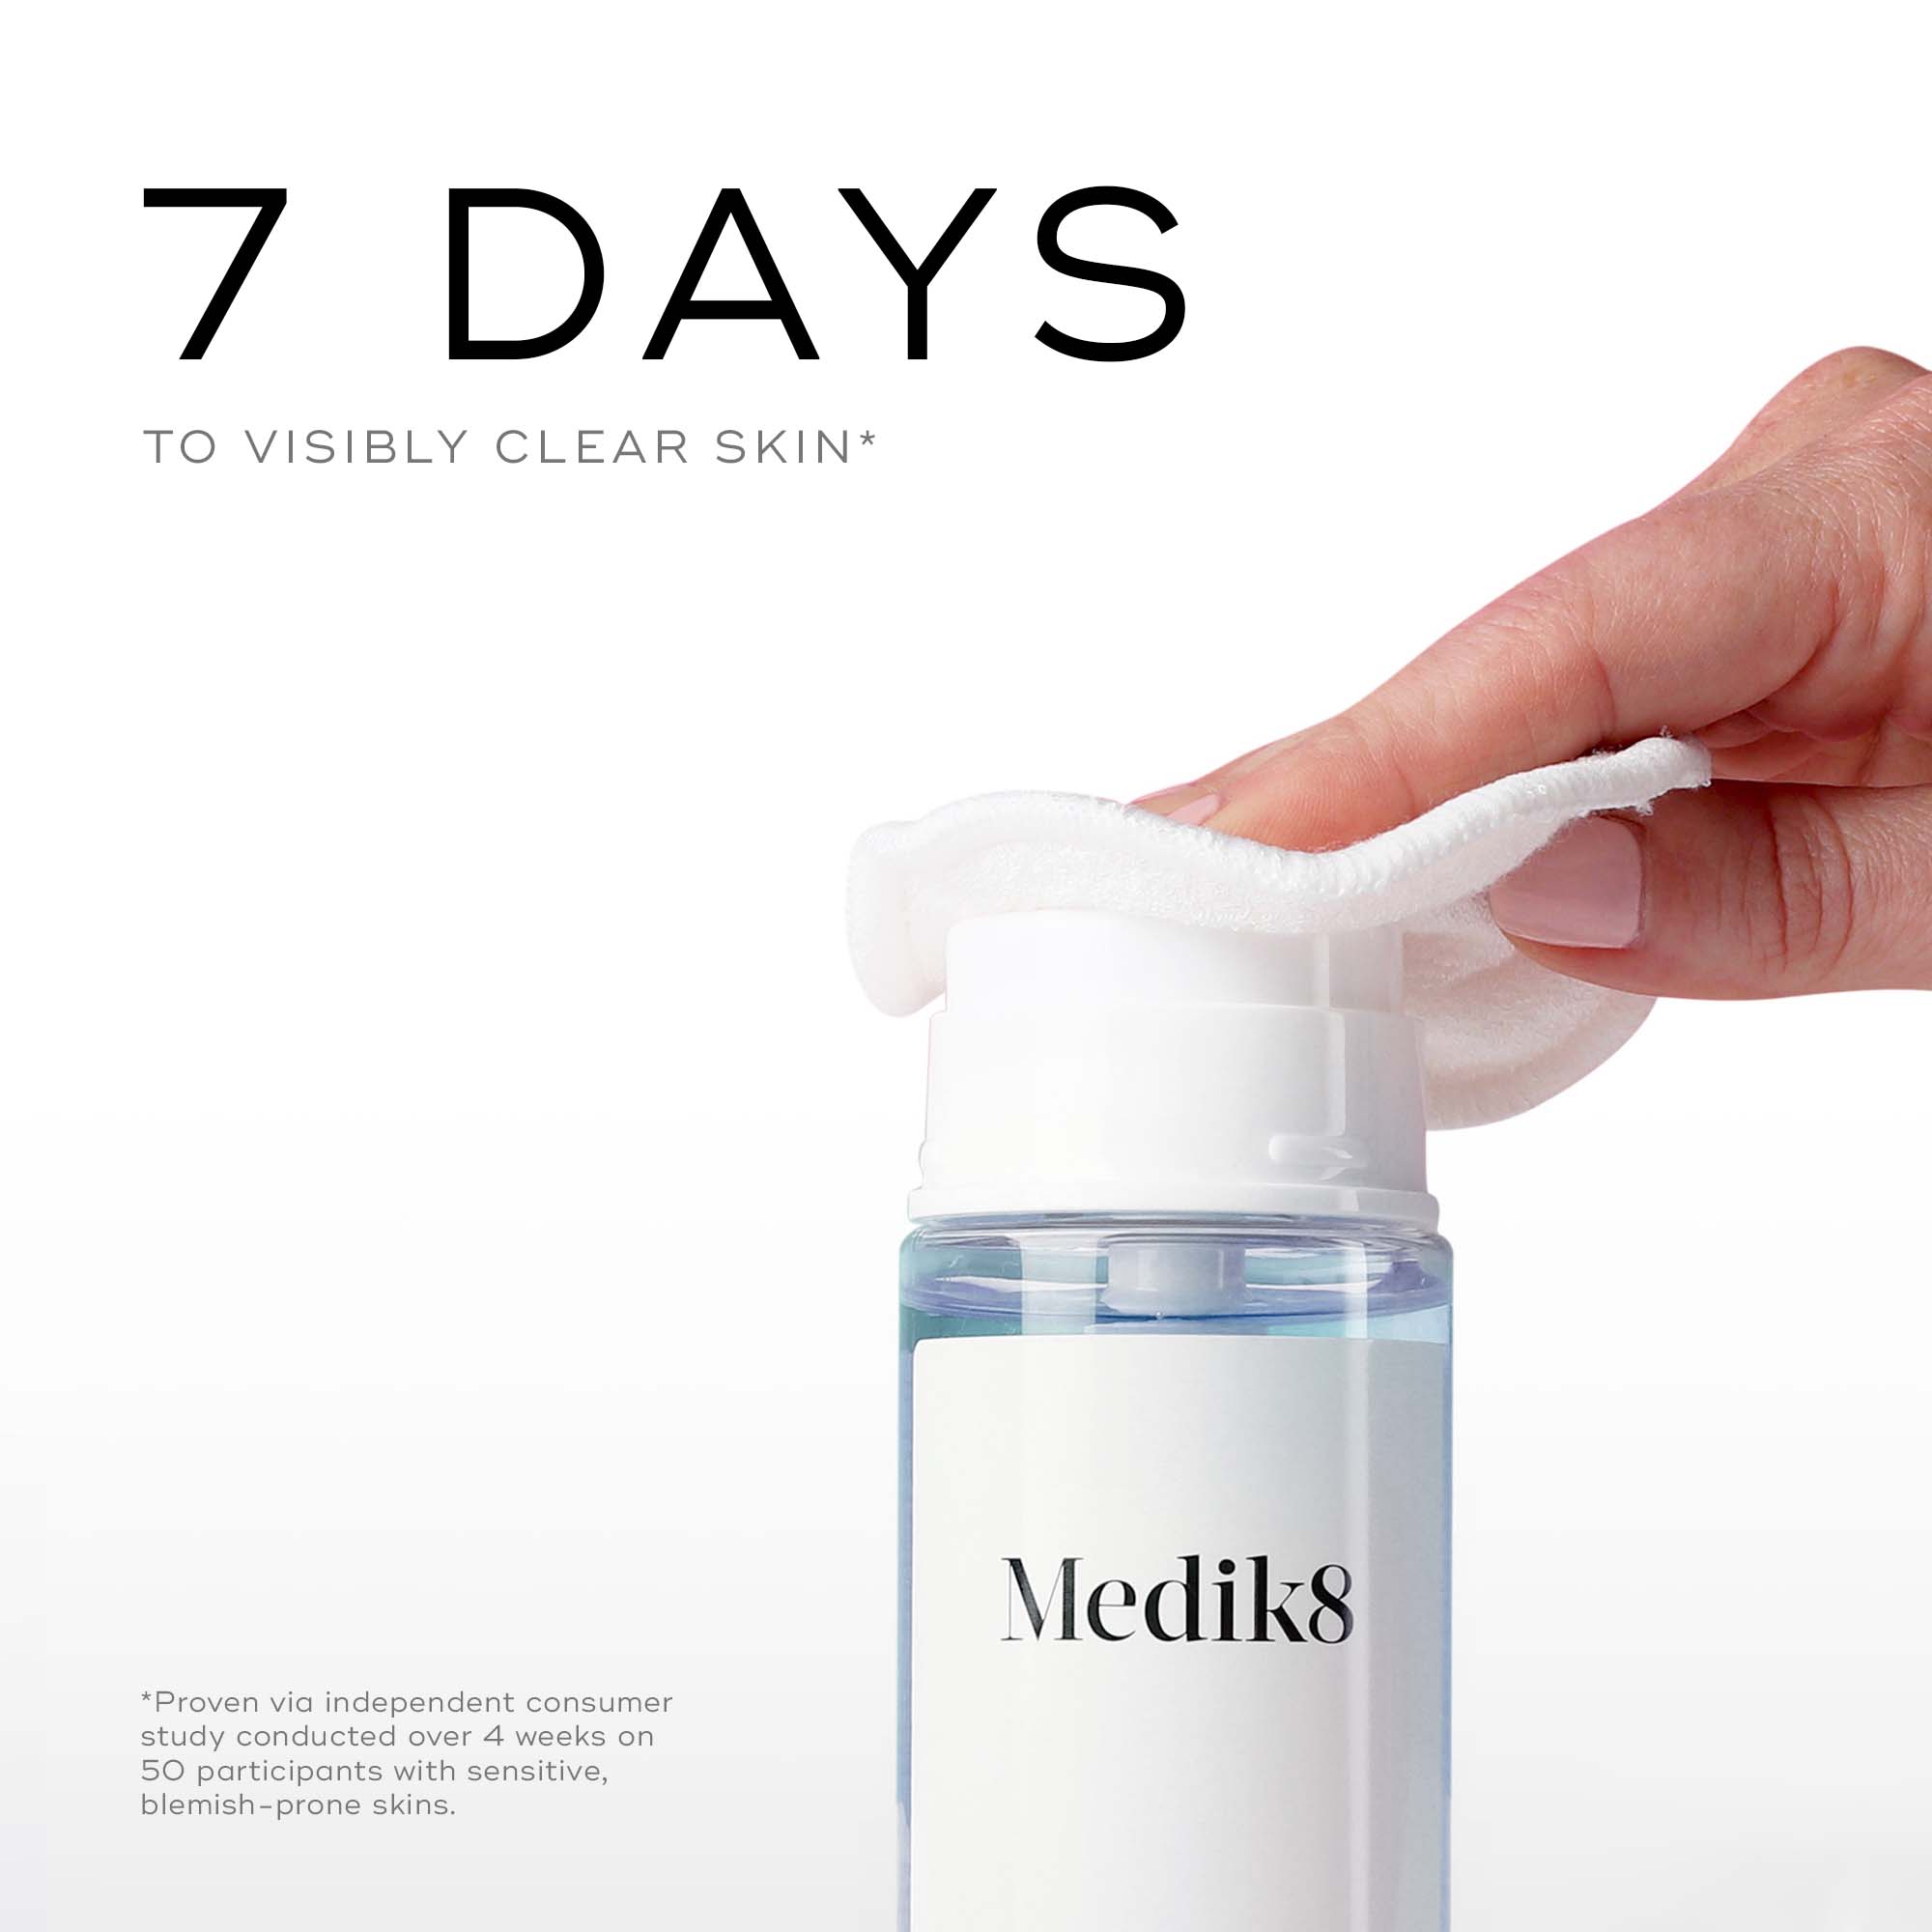 Press & Clear™ Refill MEDIK8 Official Stockist. Worldwide shipping. Medical-grade skincare. The M-ethod Aesthetics